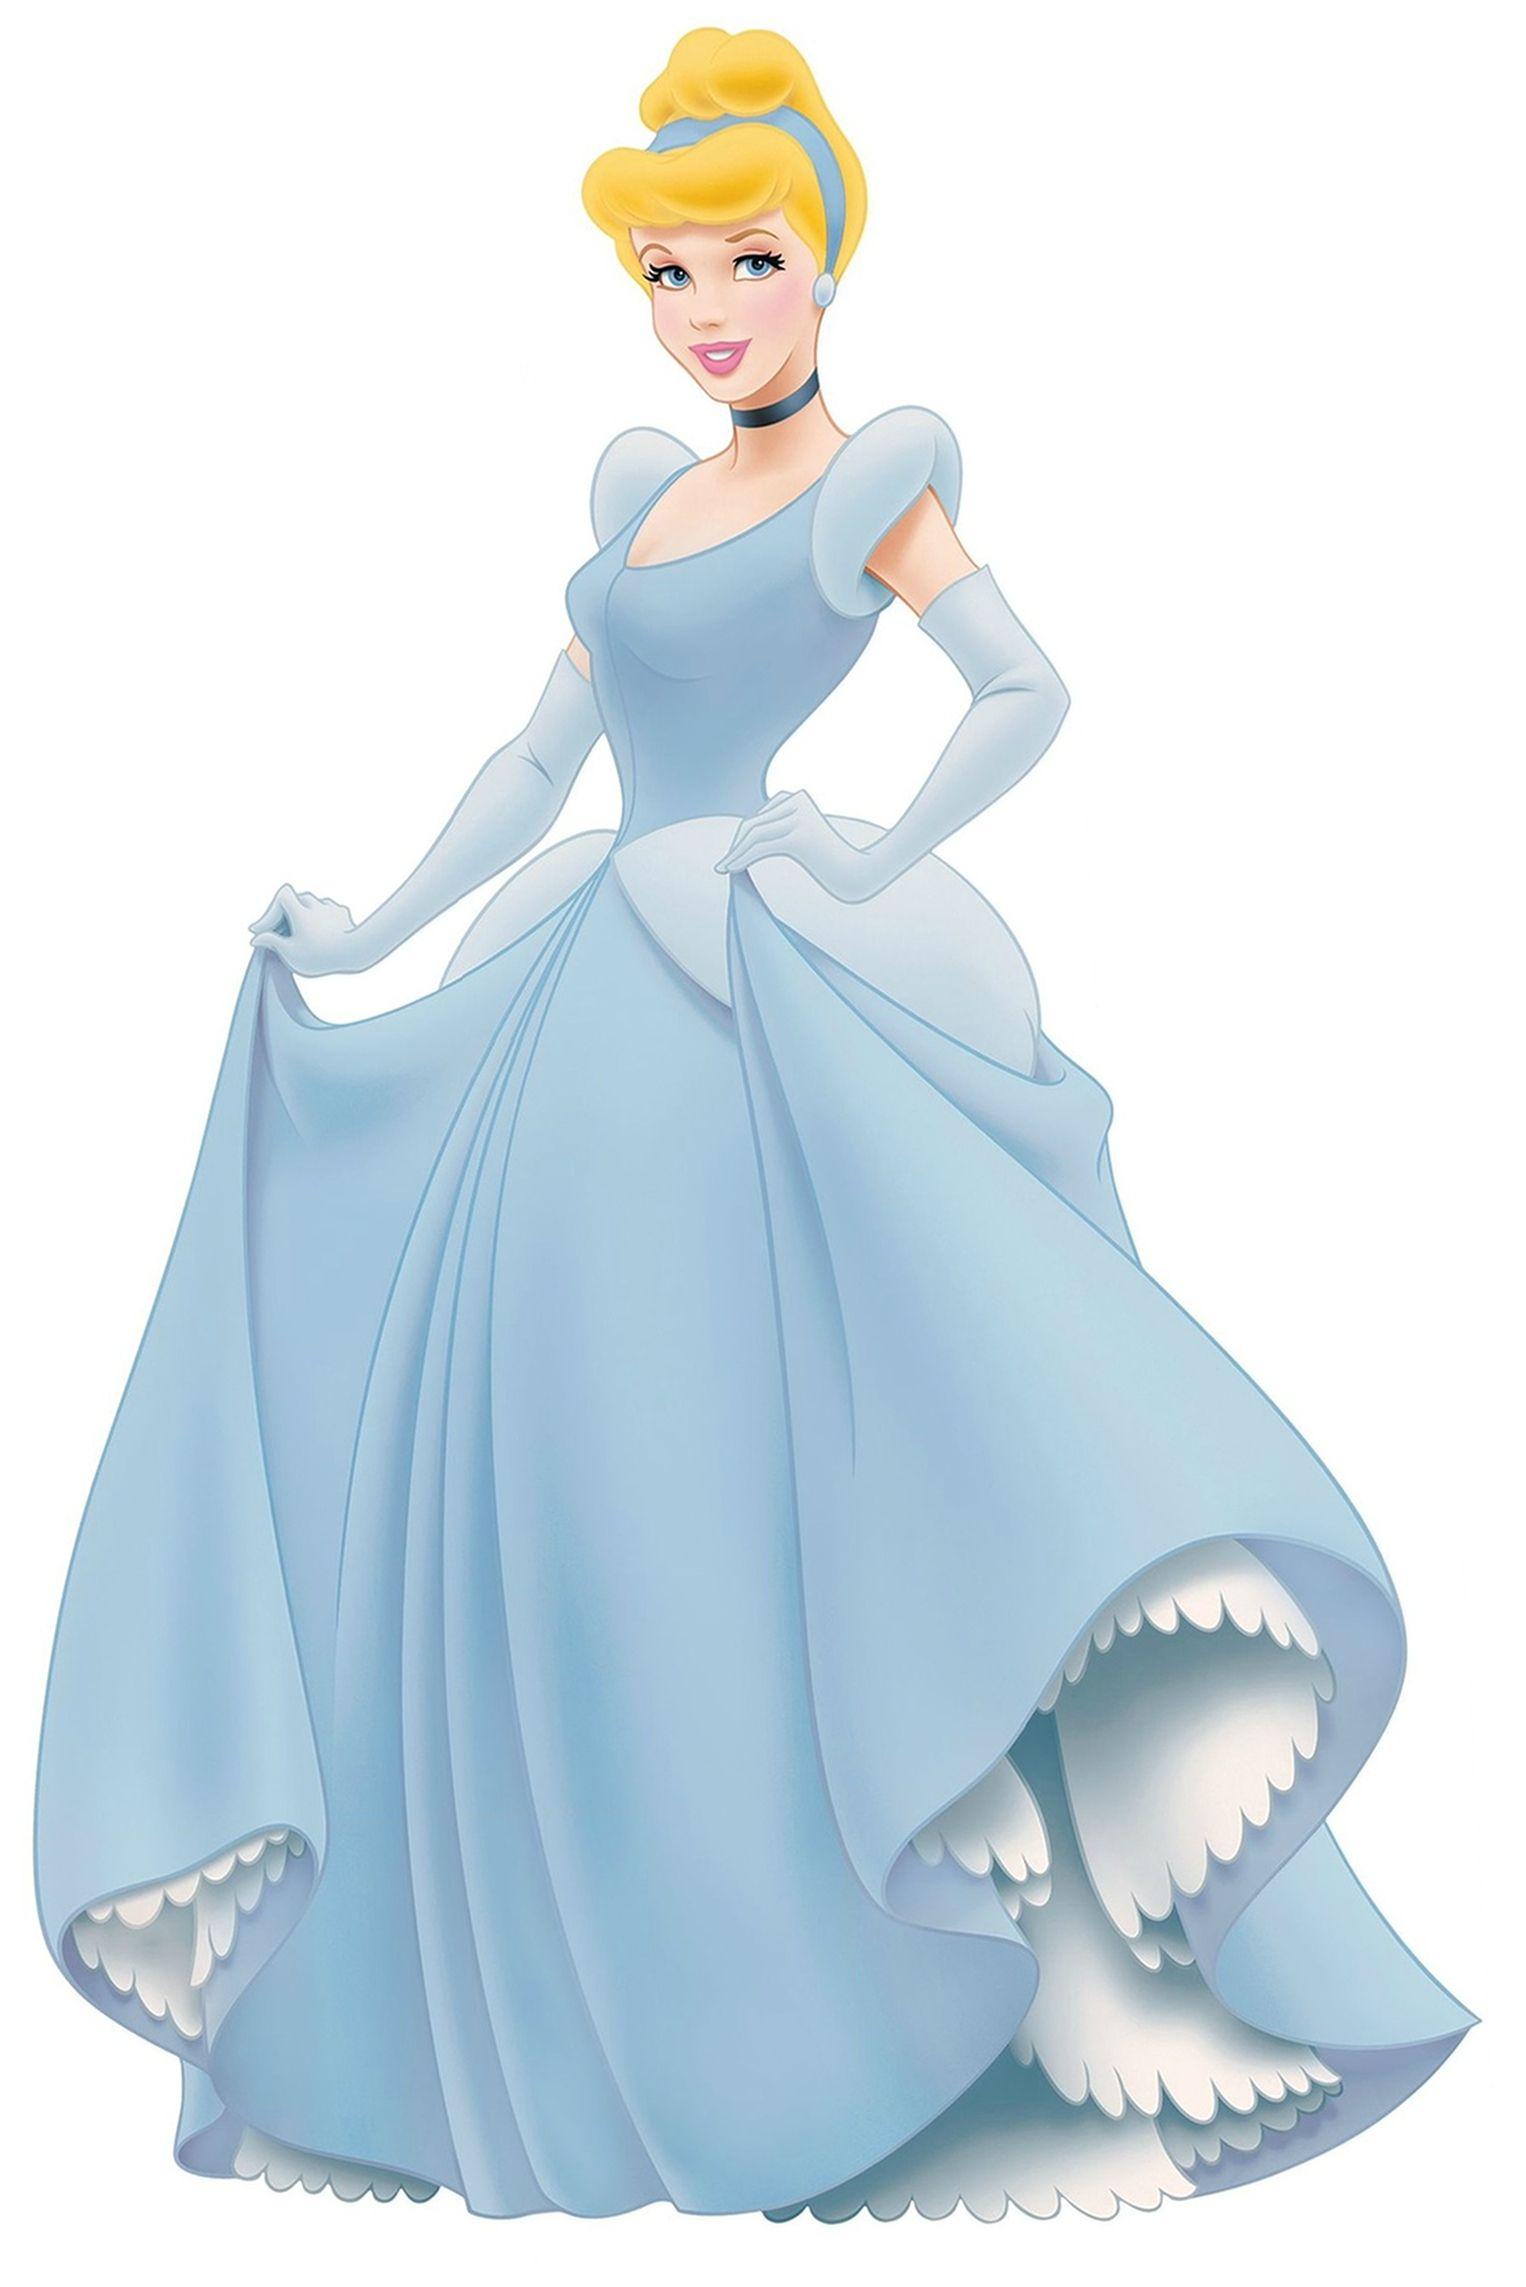 Princess Cinderella Disney Princess Full HD Image for iPhone 6